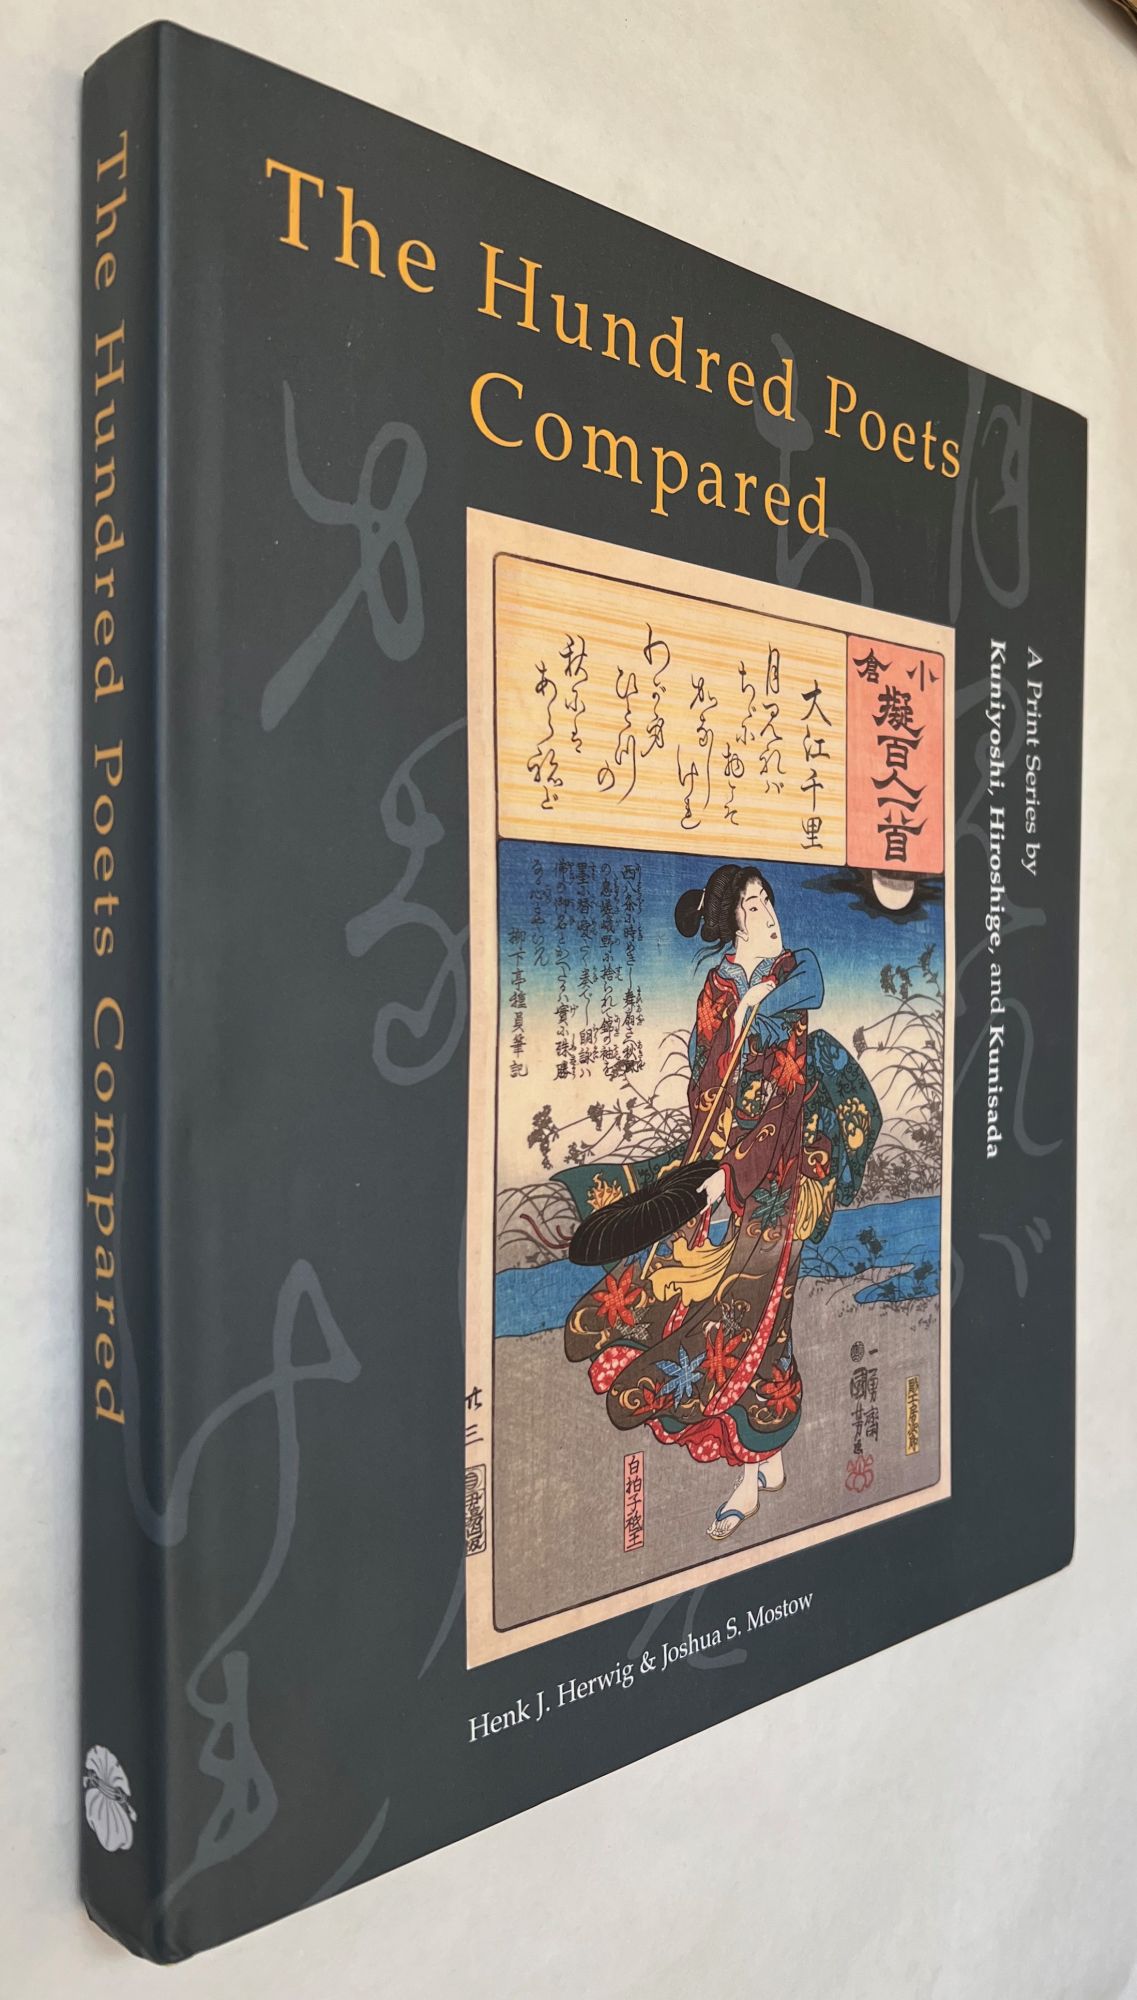 The Hundred Poets Compared: A Print Series by Kuniyoshi, Hiroshige, and Kunisada - Herwig, Henk. ; Mostow, Joshua S.